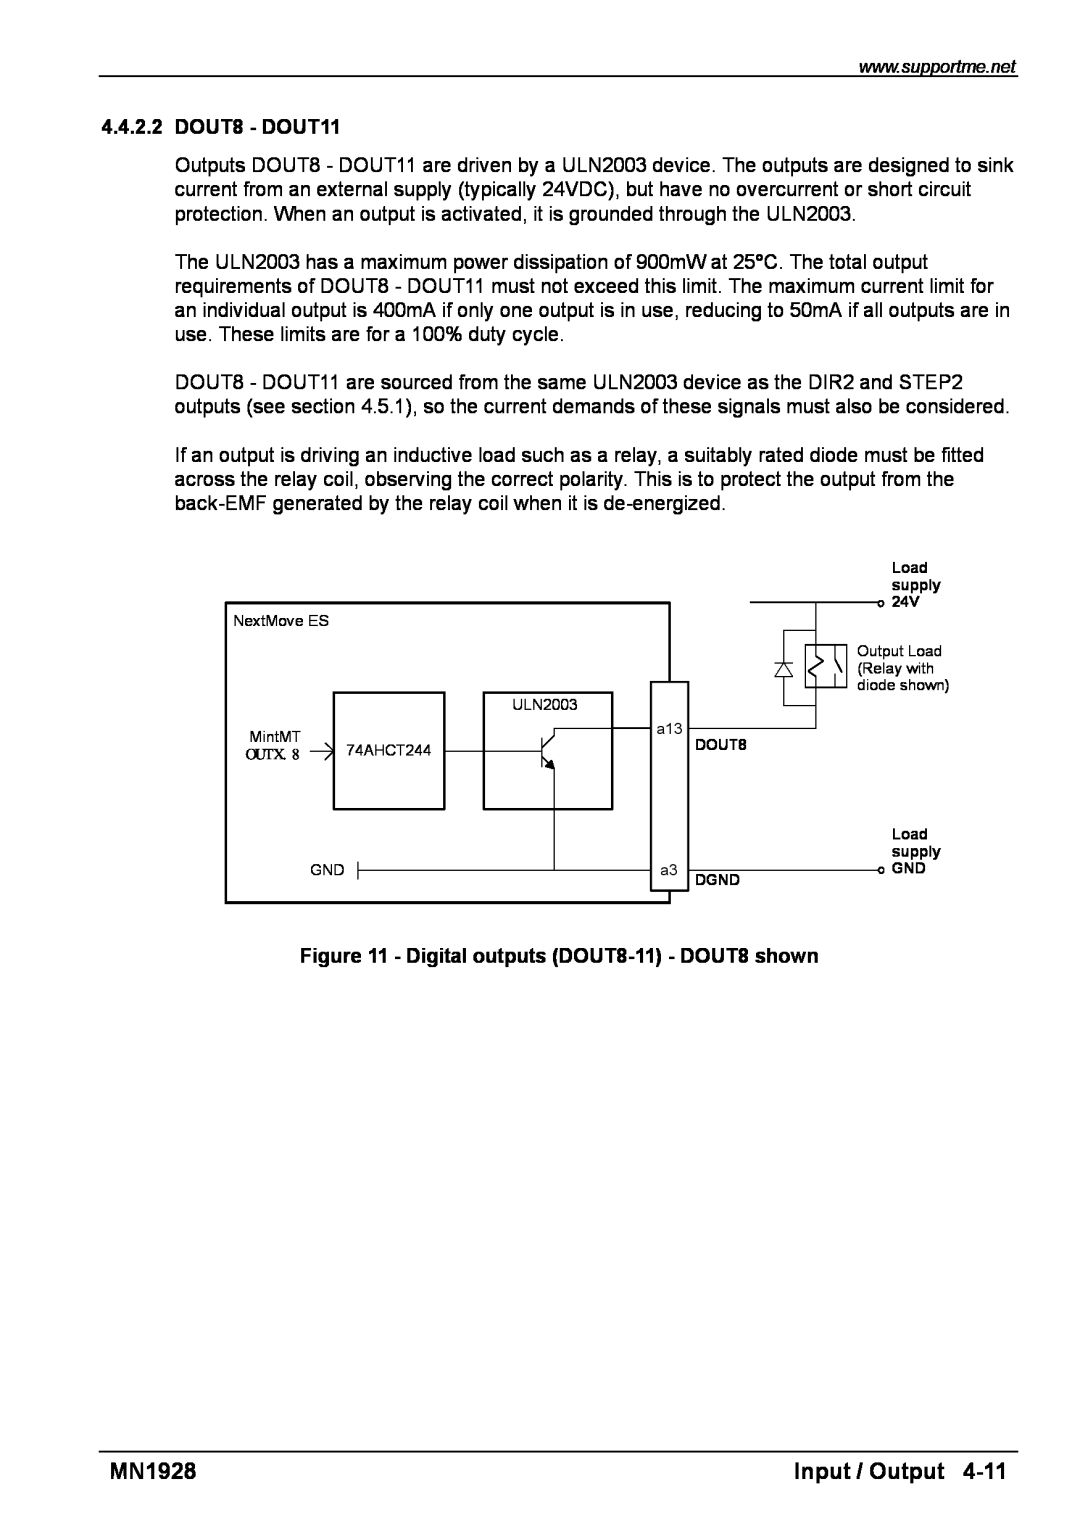 Baldor MN1928 installation manual Input / Output, DOUT8 - DOUT11, Digital outputs DOUT8-11 - DOUT8 shown, OUTX.8 